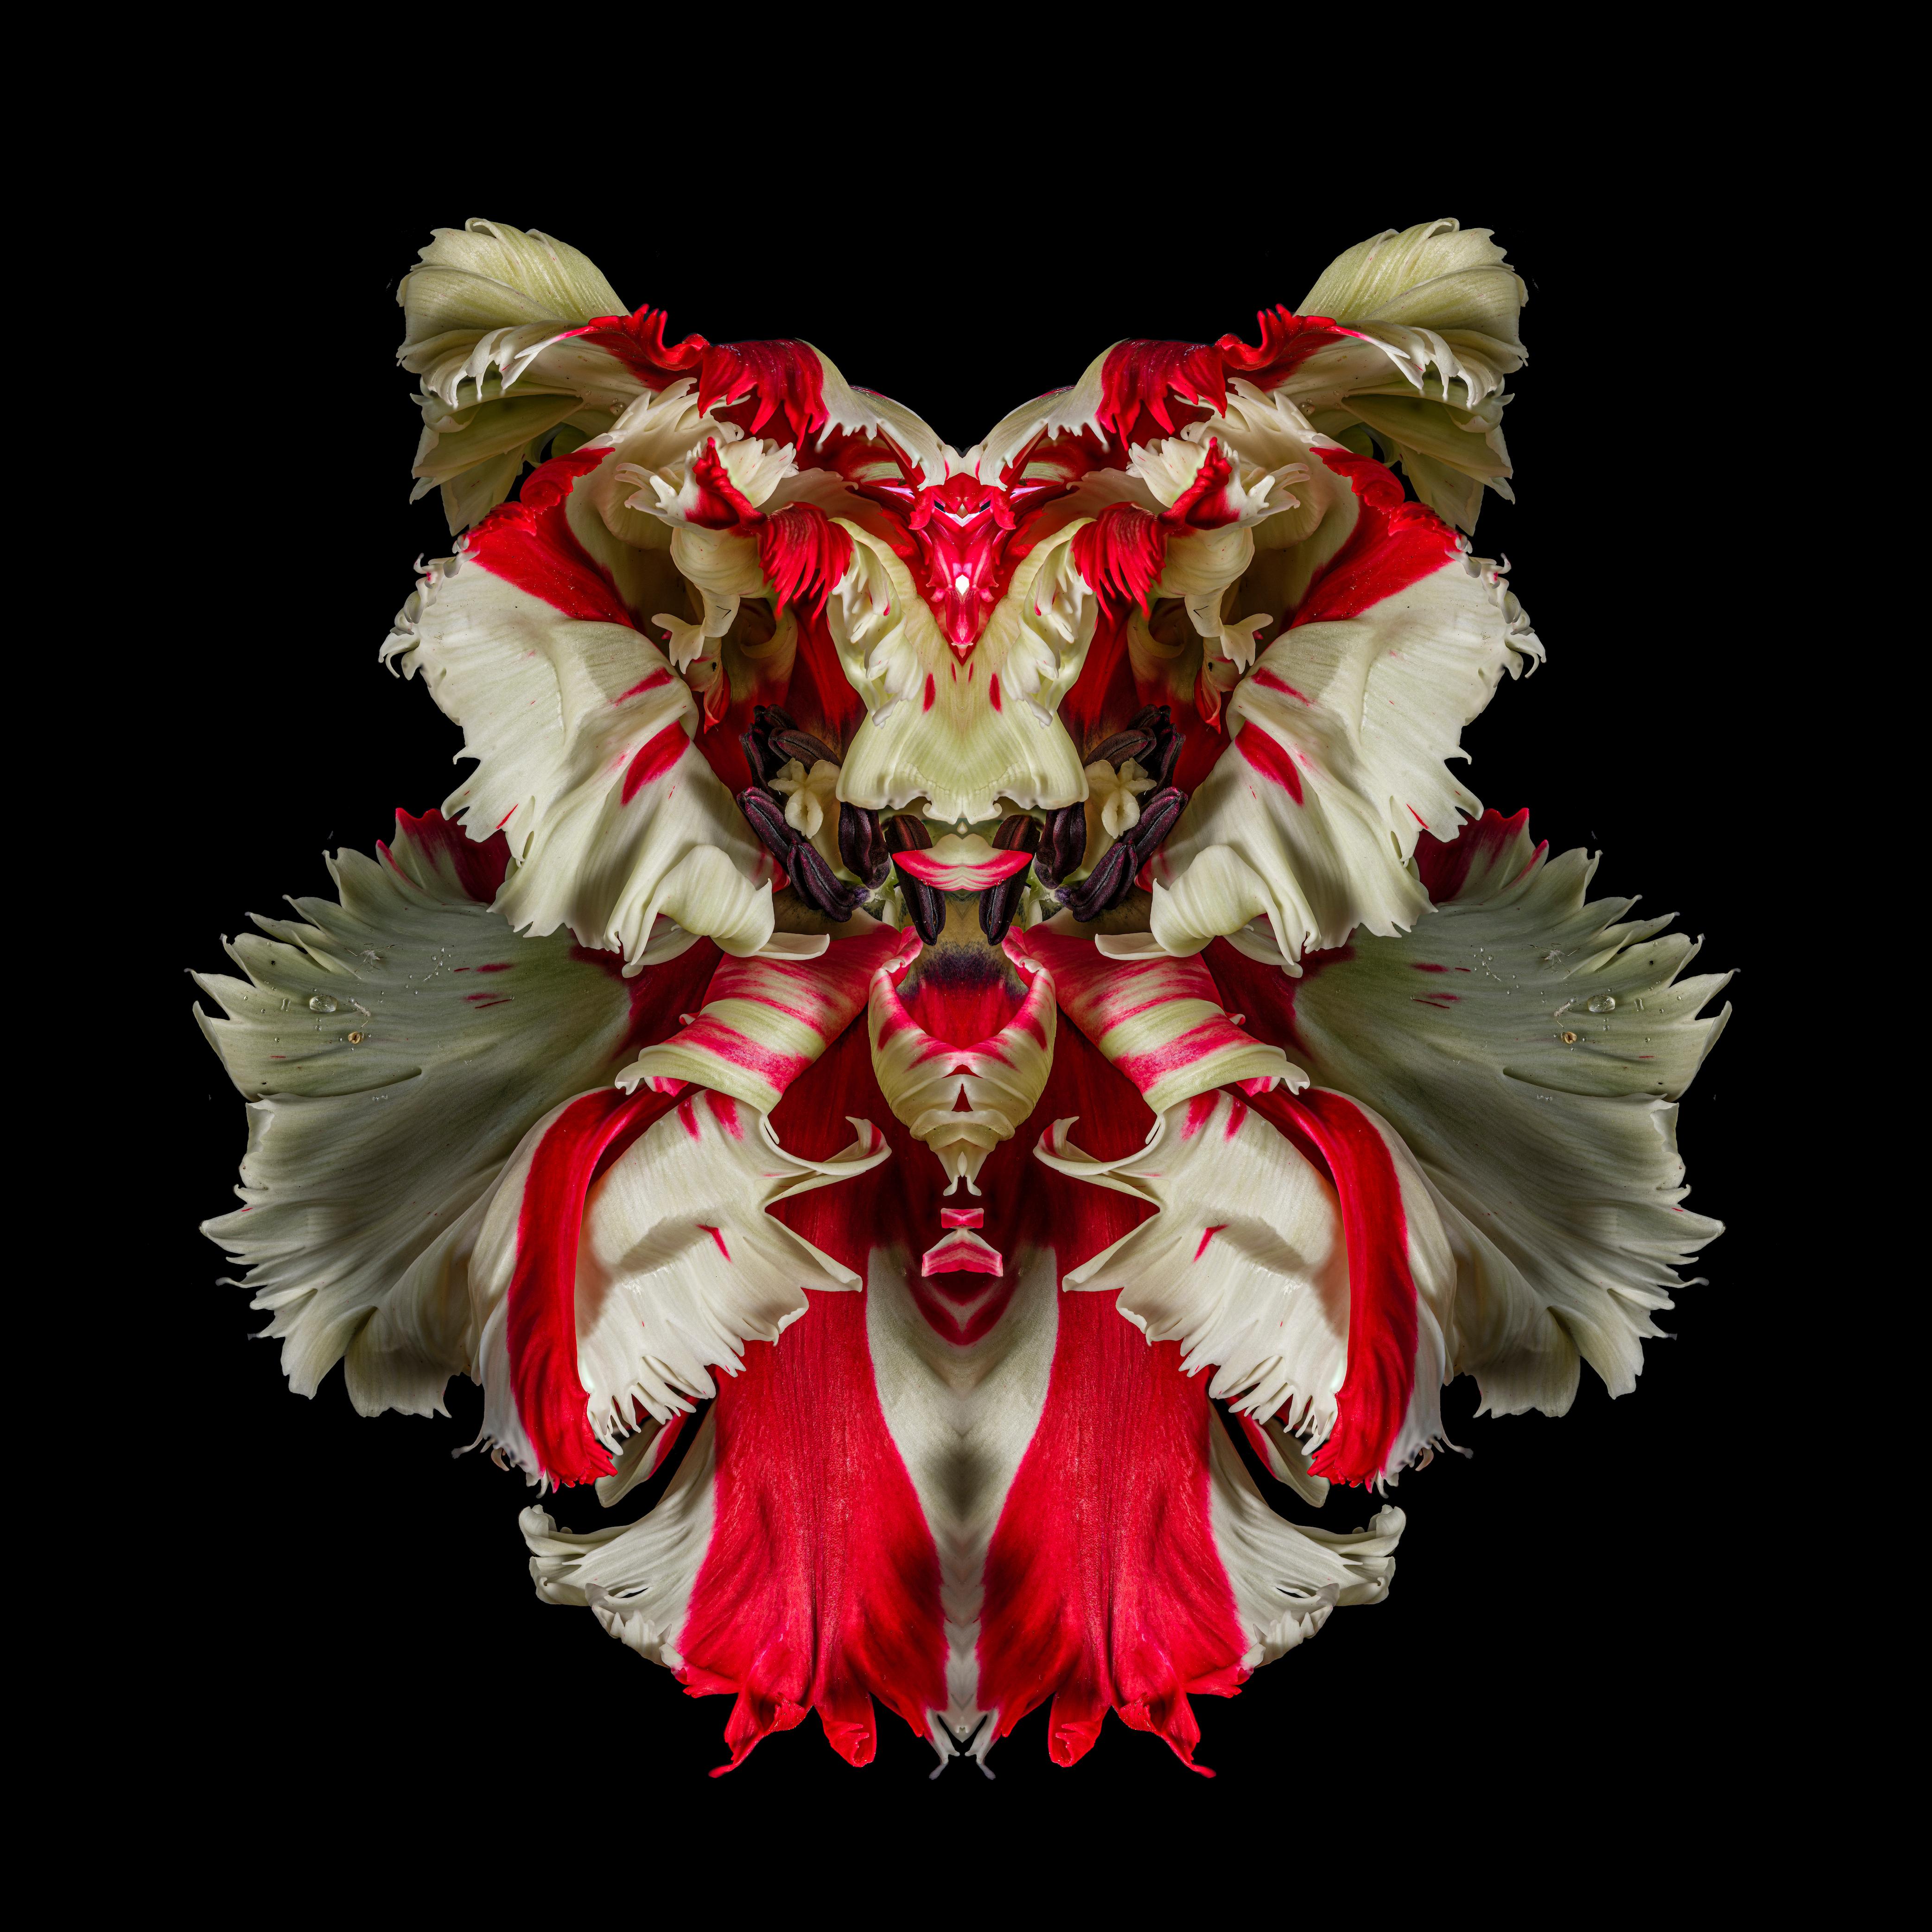 Jeff Robb Color Photograph – "Embryonale Tulpe CV" 3-D-Bewegung Lenticular rote Blume Foto gerahmt, zeitgenössische